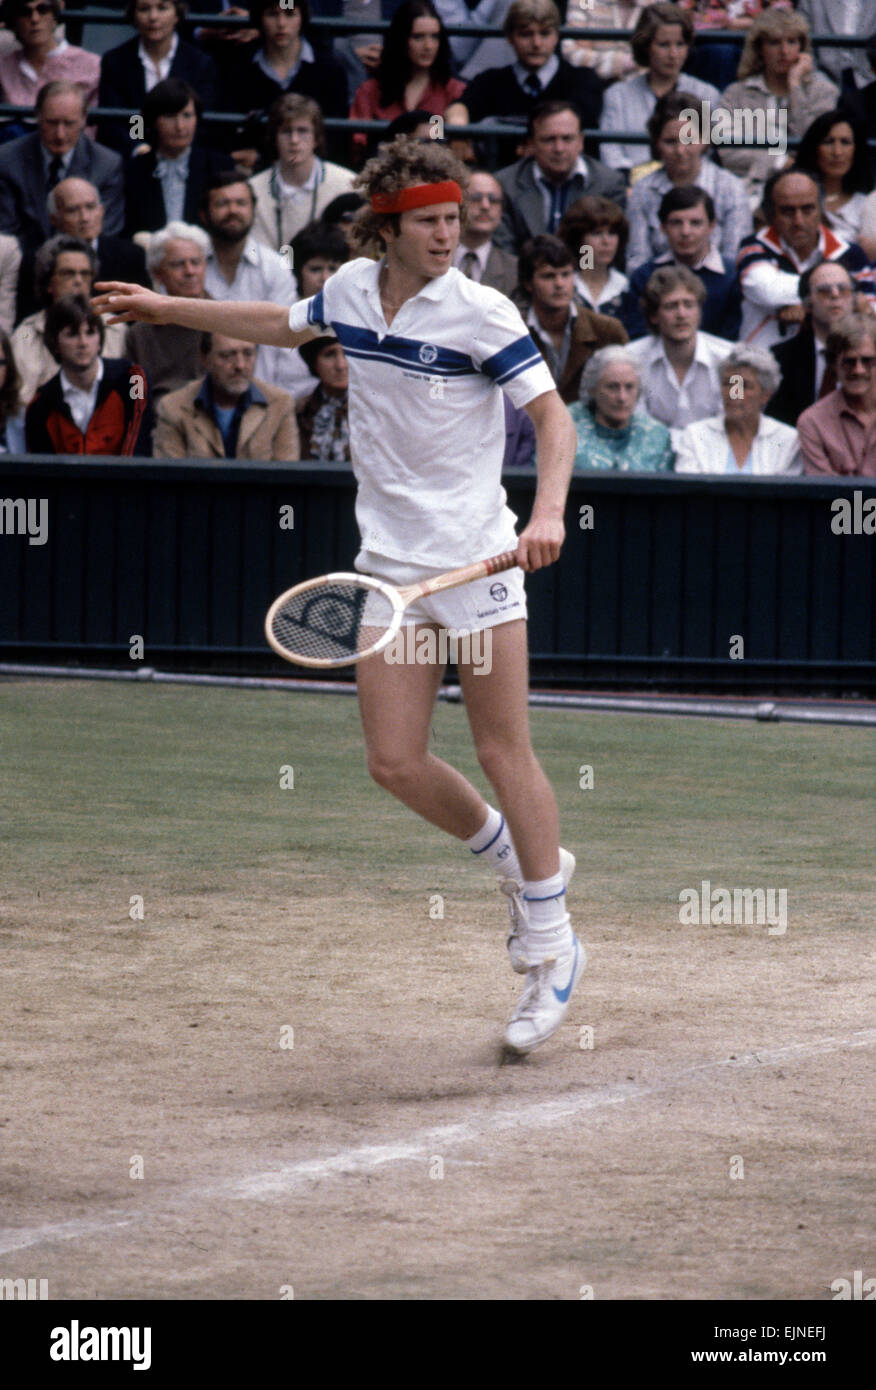 Wimbledon Final 1981. John McEnroe v Bjorn Borg. 4th July 1981. *** Local Caption *** watscan - - 19/04/2010 Stock Photo